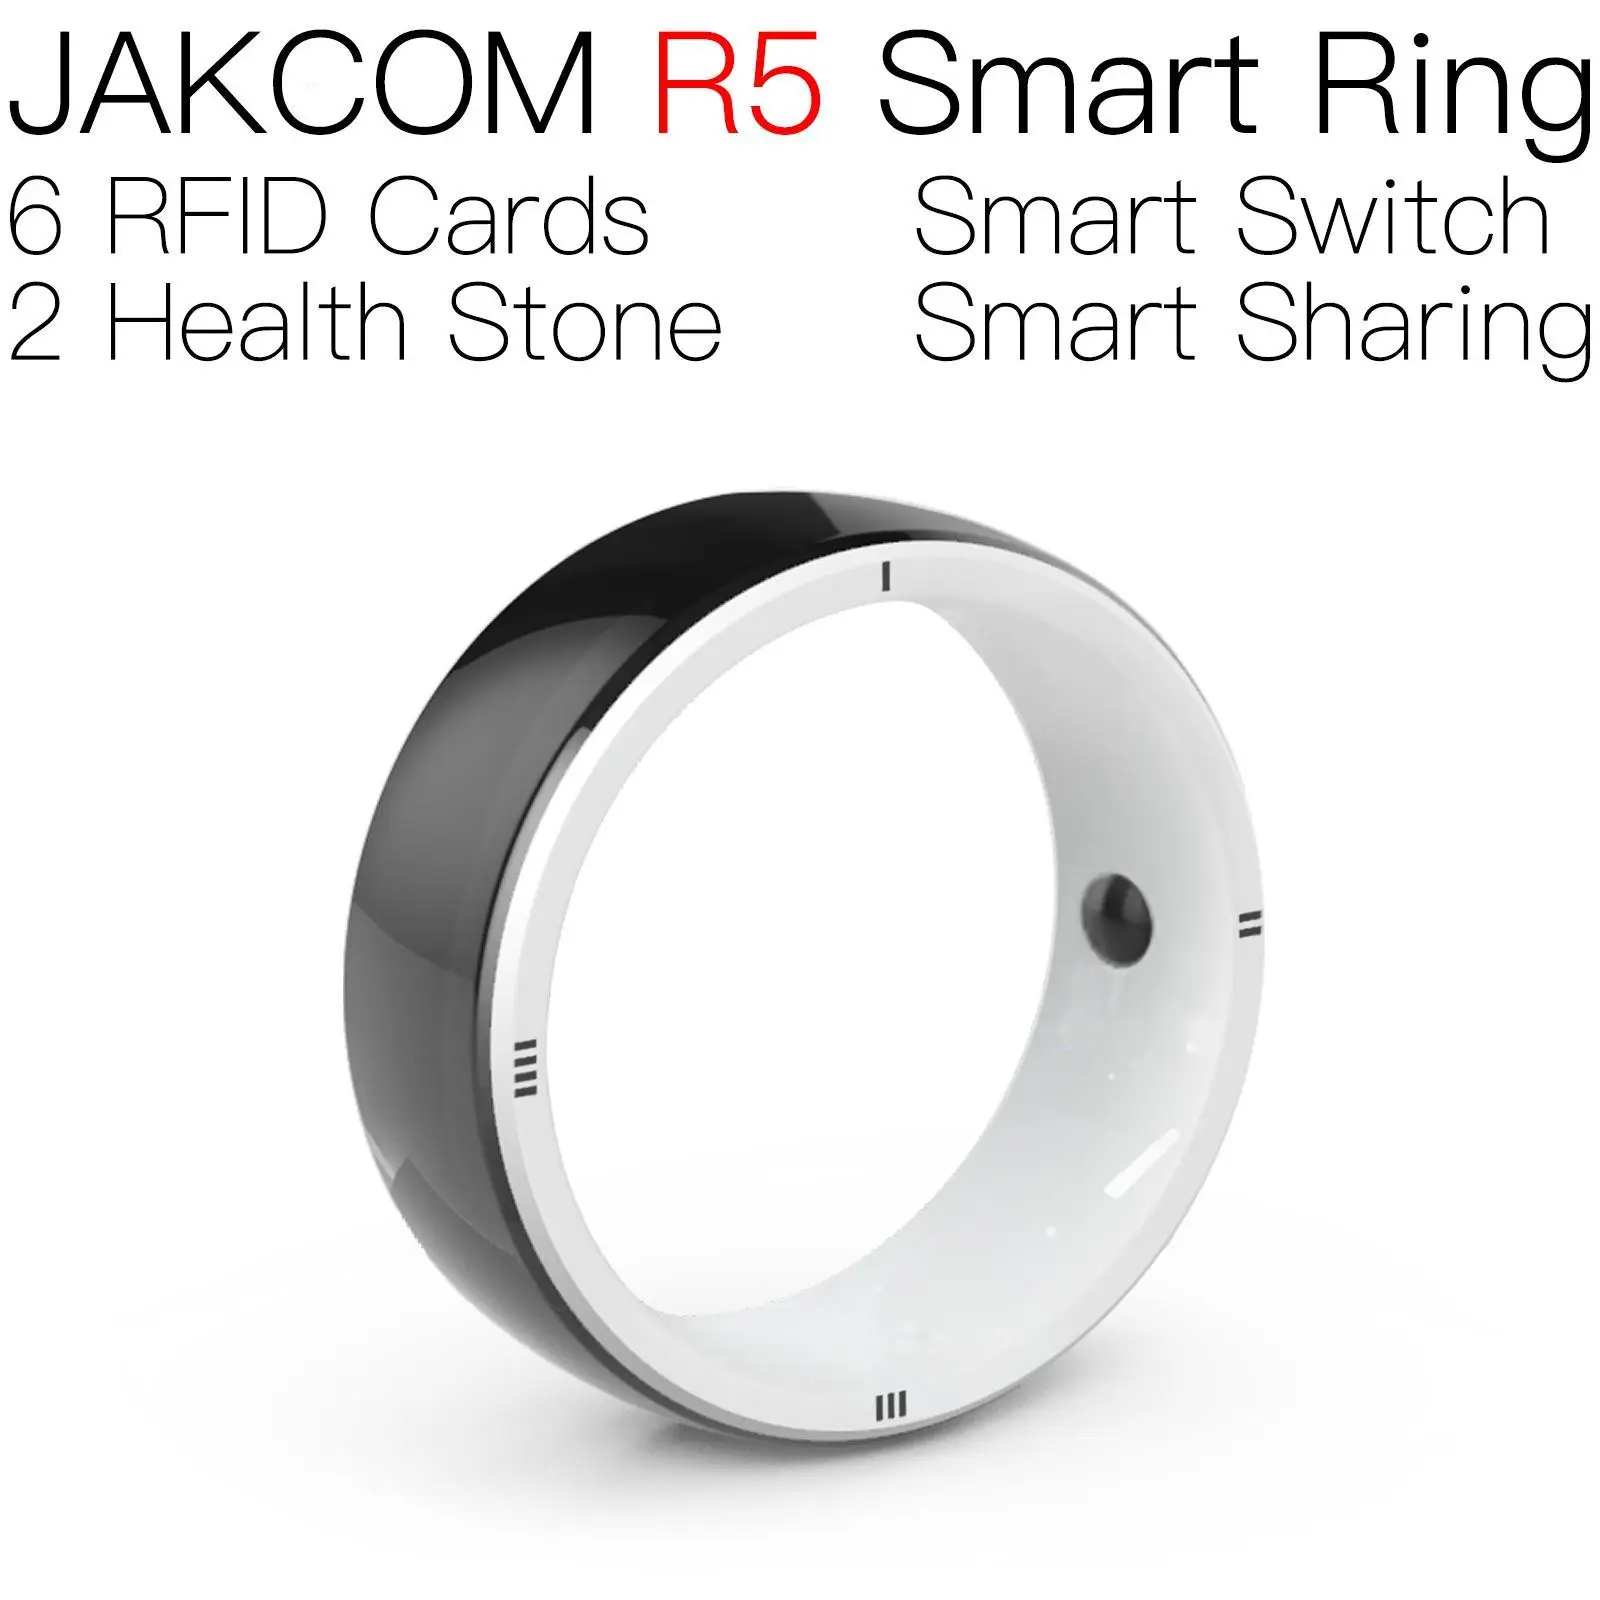 

JAKCOM R5 Smart Ring better than rfid 125khz band copy pet waterproof sticker carte crossing freya englisch super handheld tag